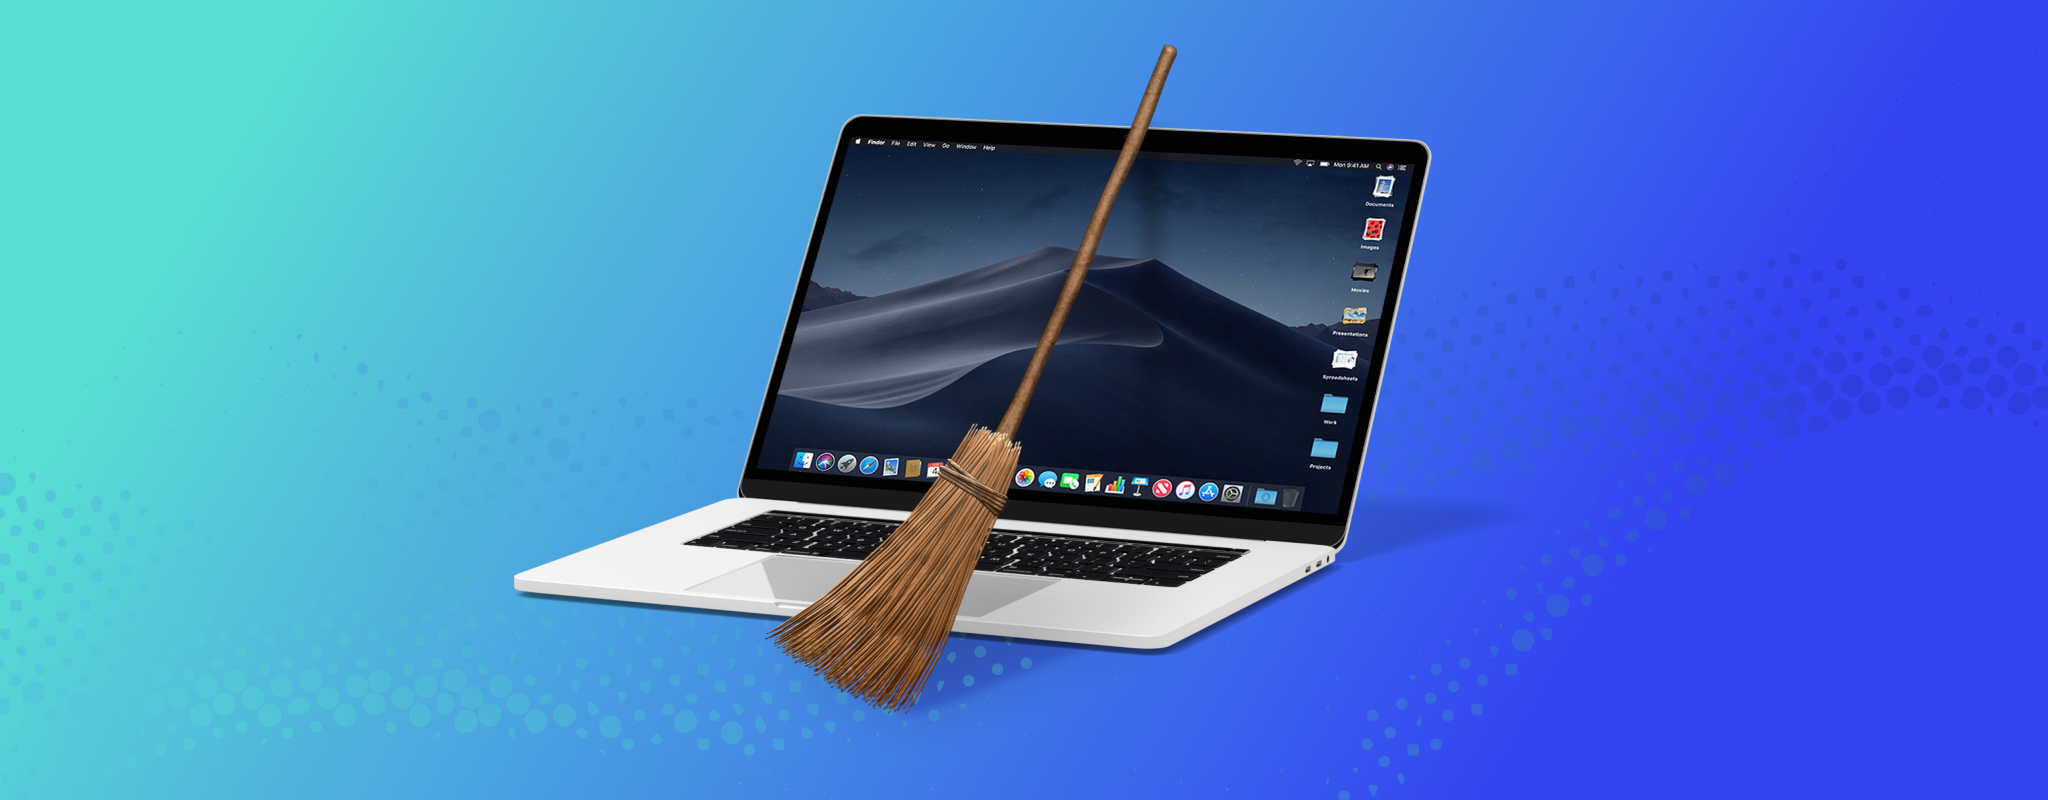 virus detected advanced mac cleaner